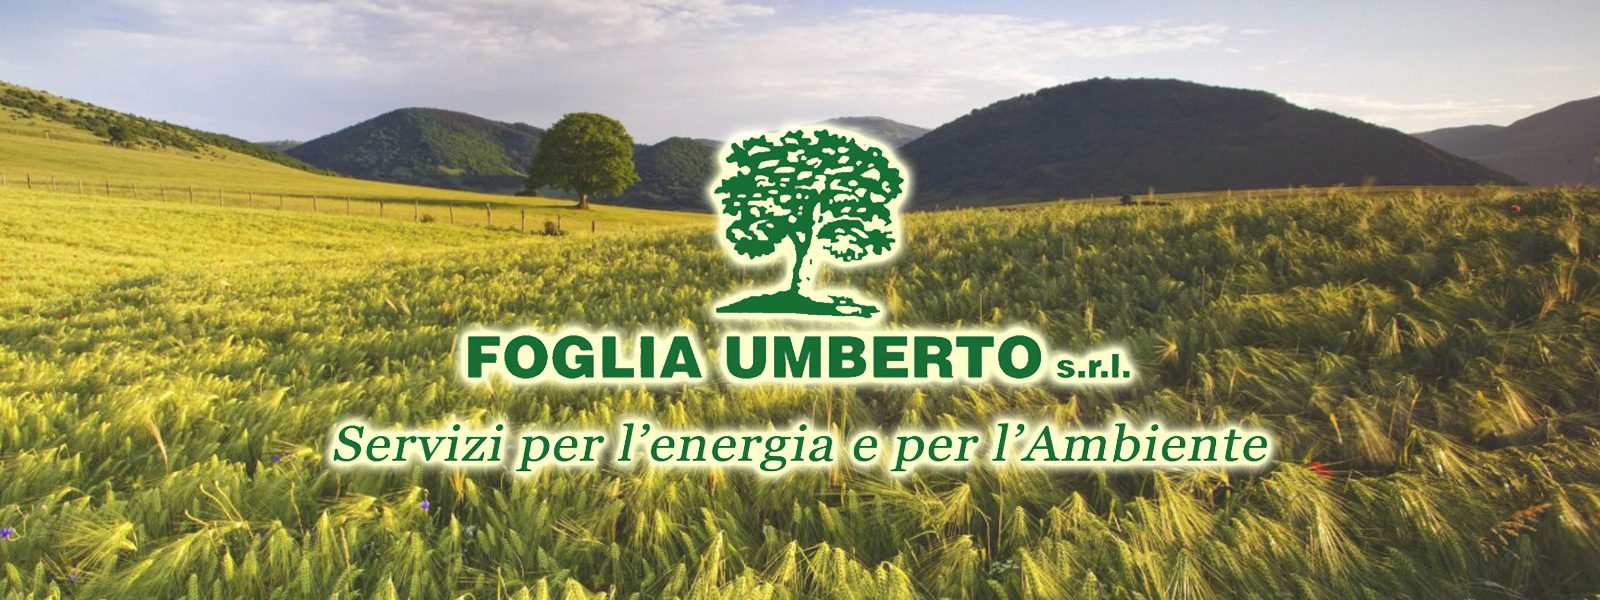 Foglia Umberto S.r.l.